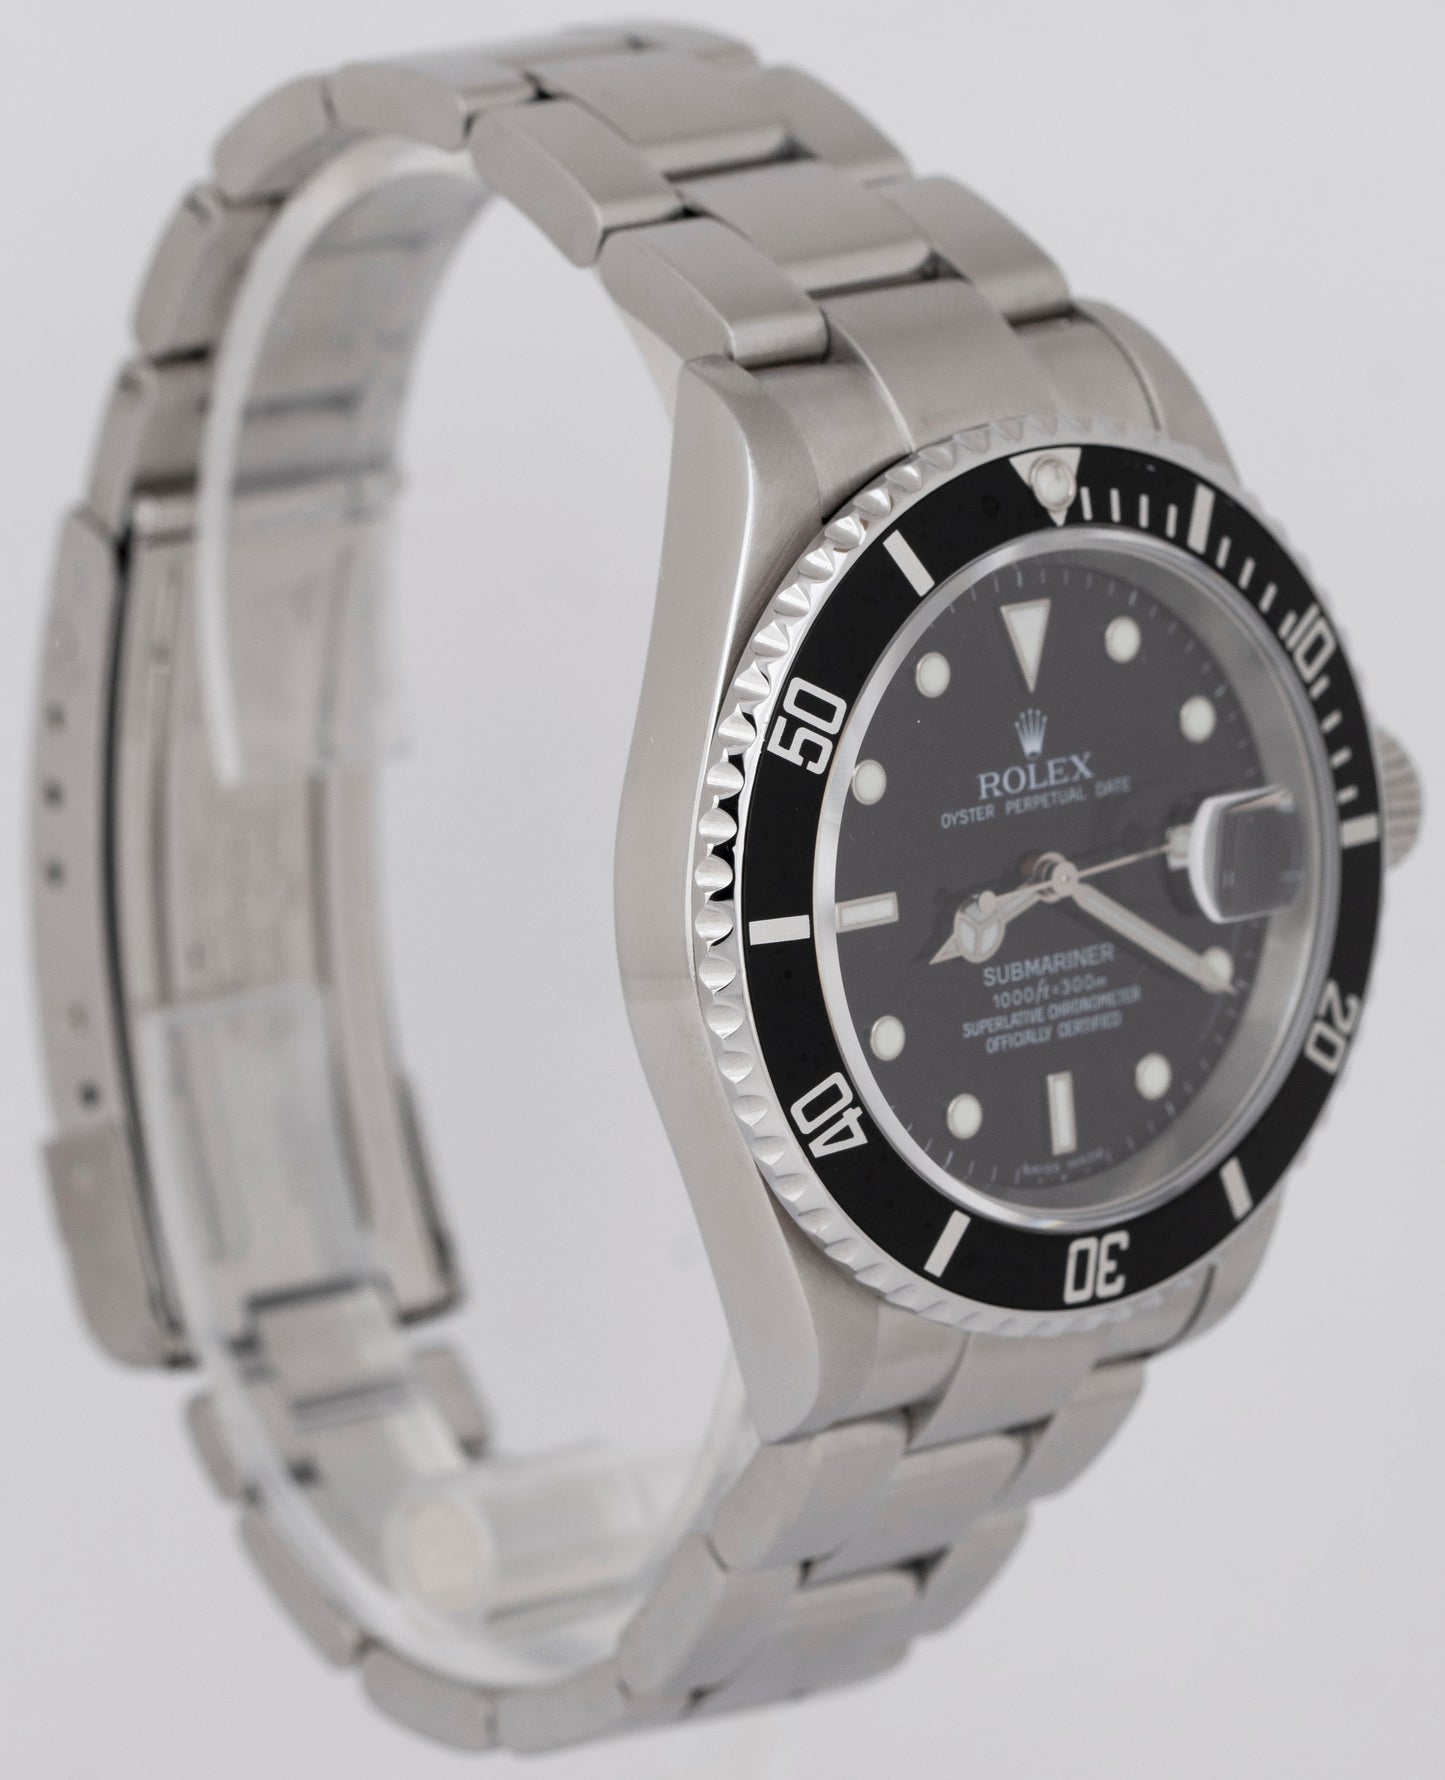 Rolex Submariner Date 40mm Black NO-HOLES CASE Stainless Steel Watch 16610